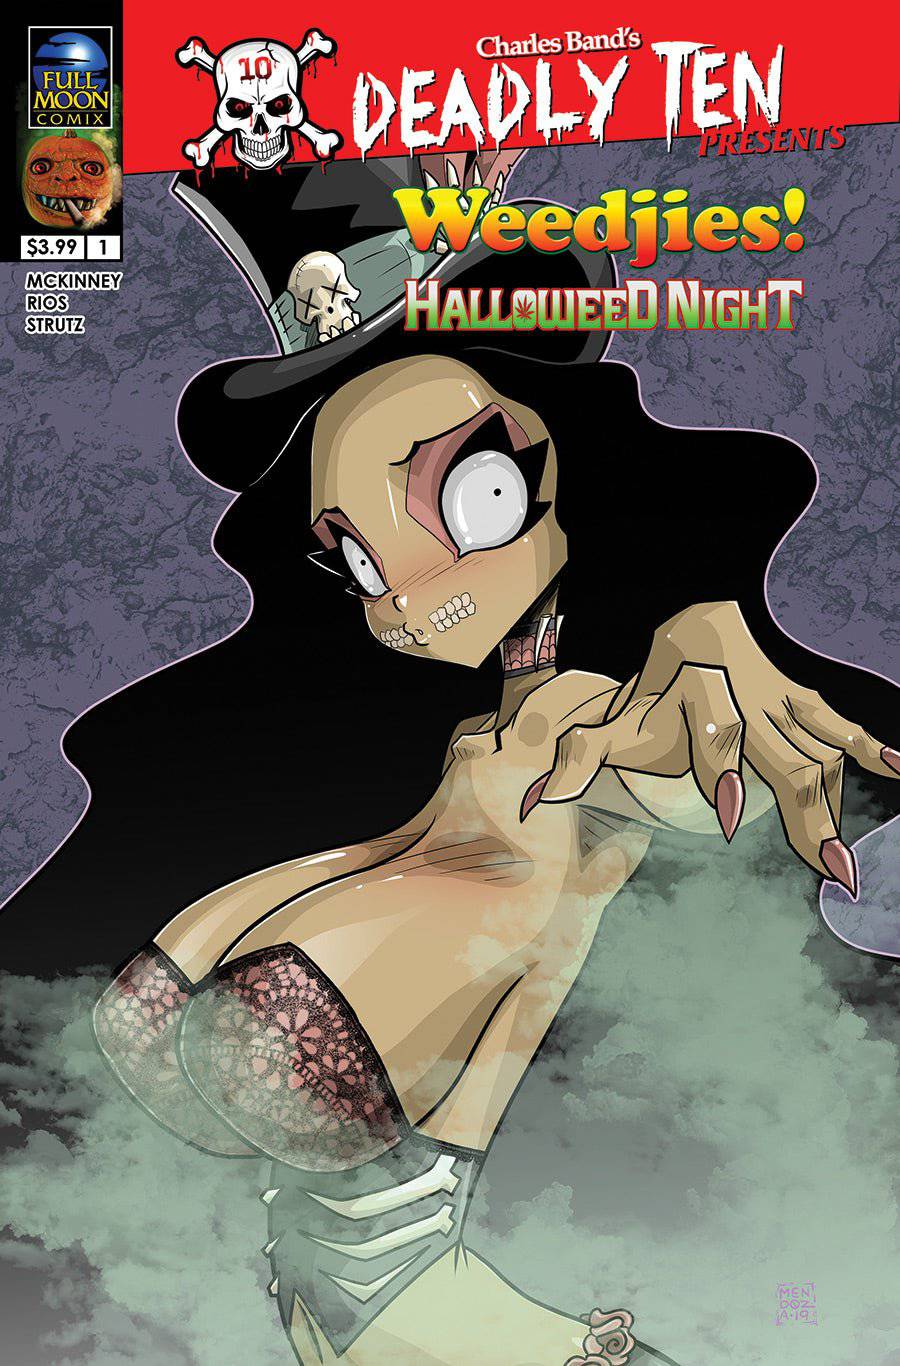 Deadly Ten Presents #2: Weedjies! Halloweed Night (Dan Mendoza cover)